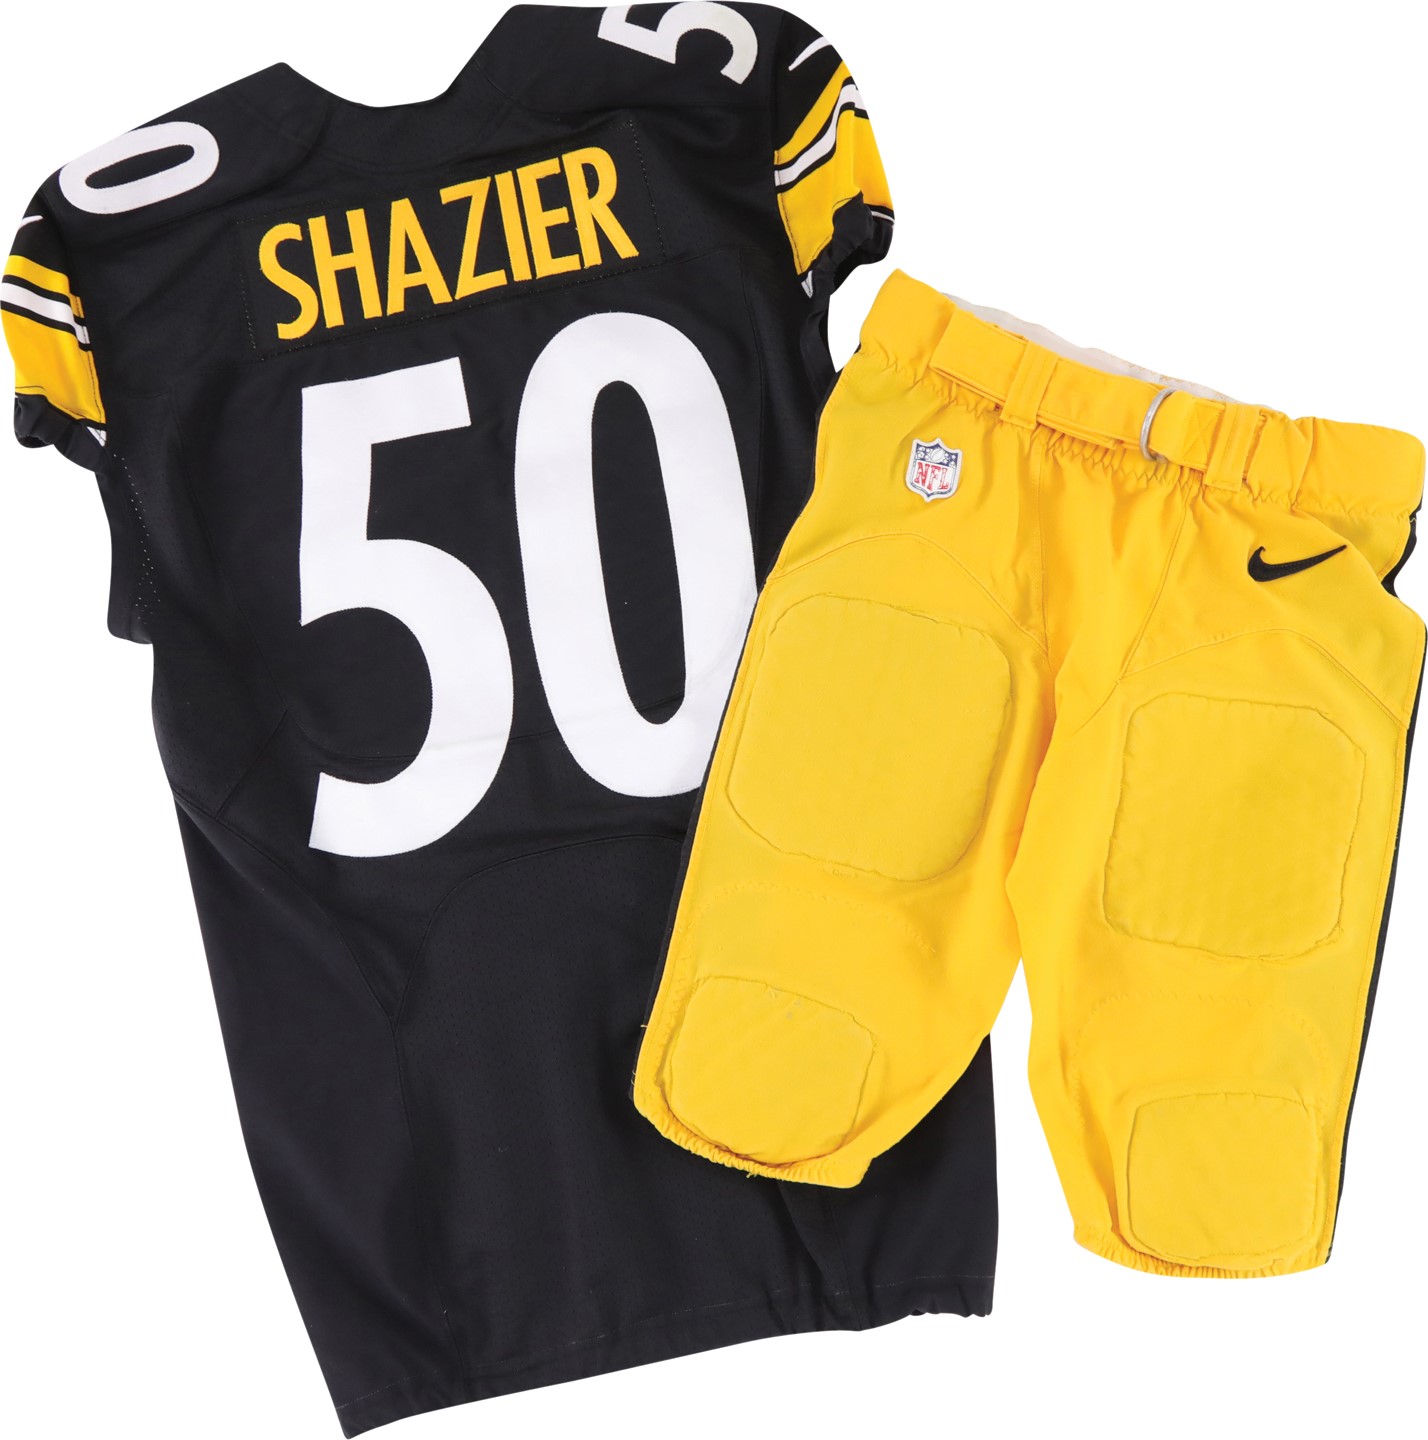 - 2015 Ryan Shazier Pittsburgh Steelers Game Worn Uniform (Photo-Matched & Steelers LOA)